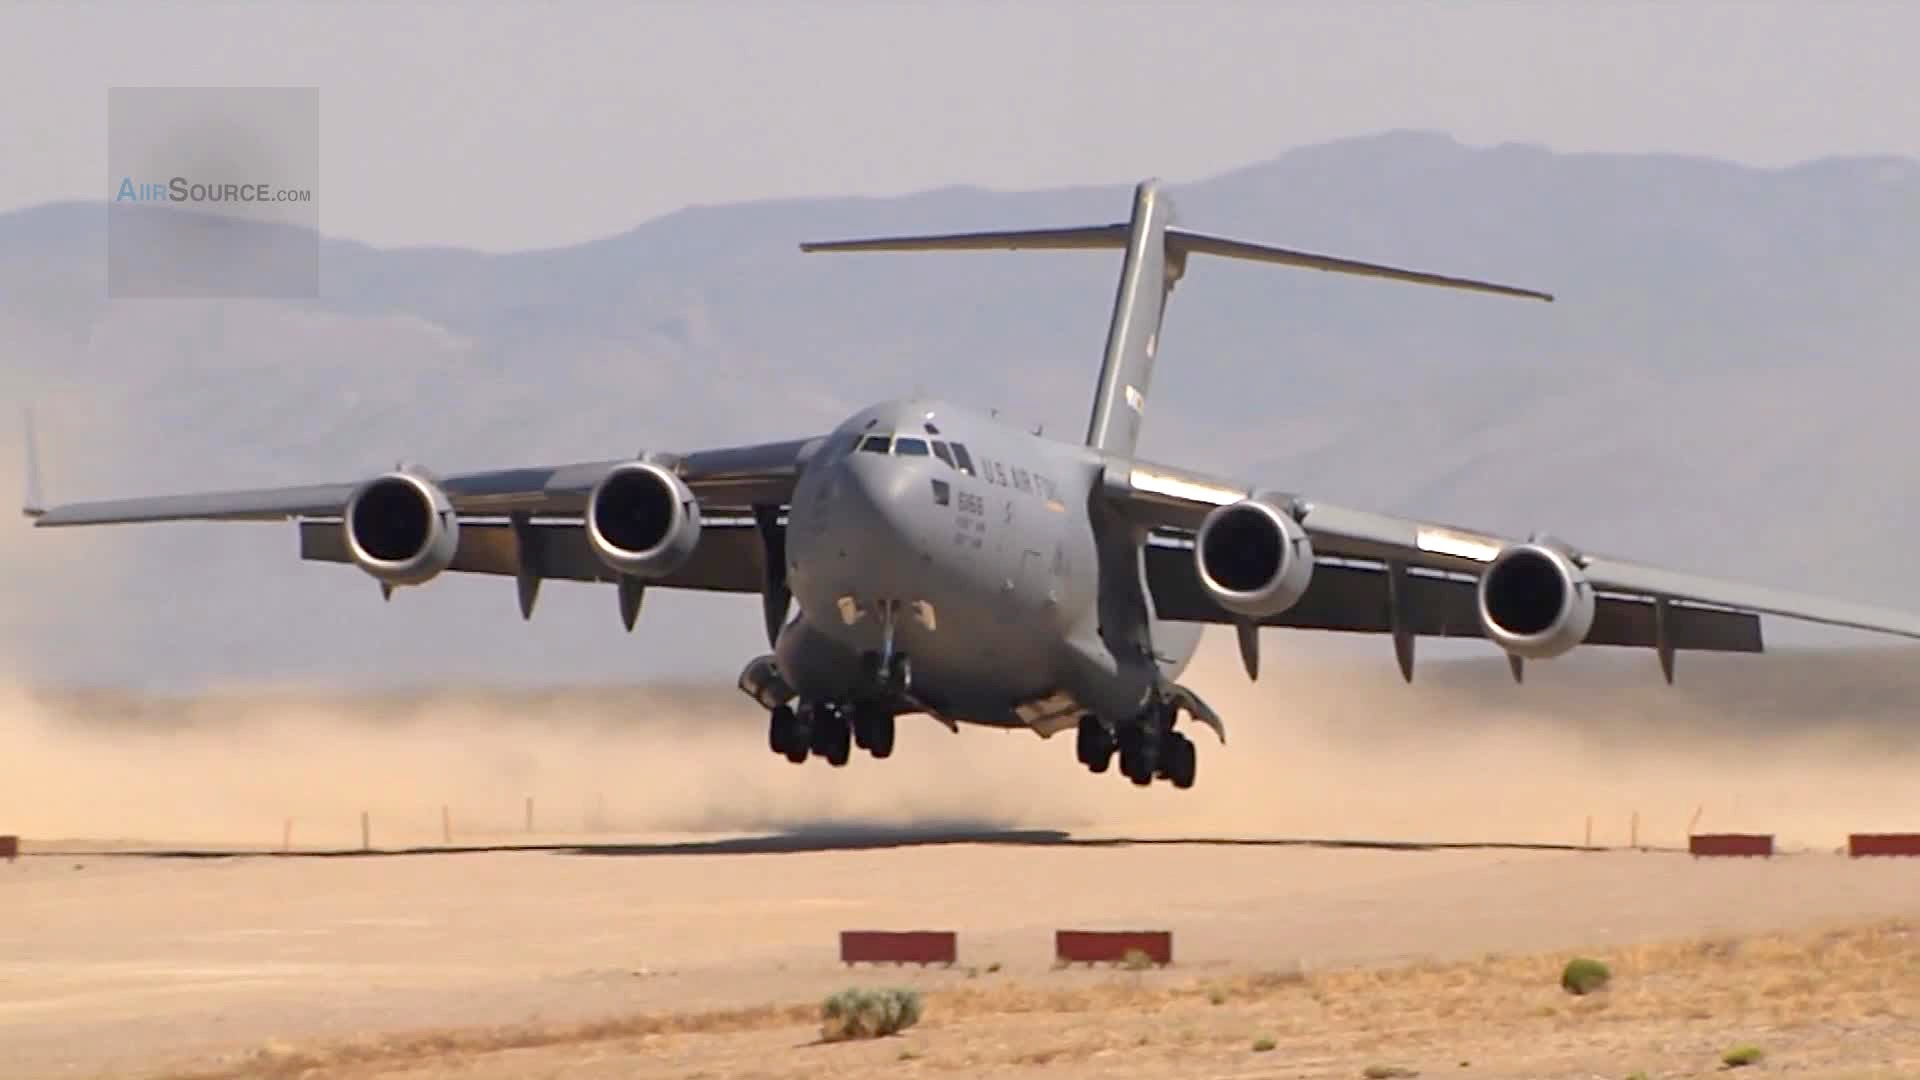 MIGHTY C-17 Globemaster III Landing/Takeoff On A Dirt Airfield - YouTube